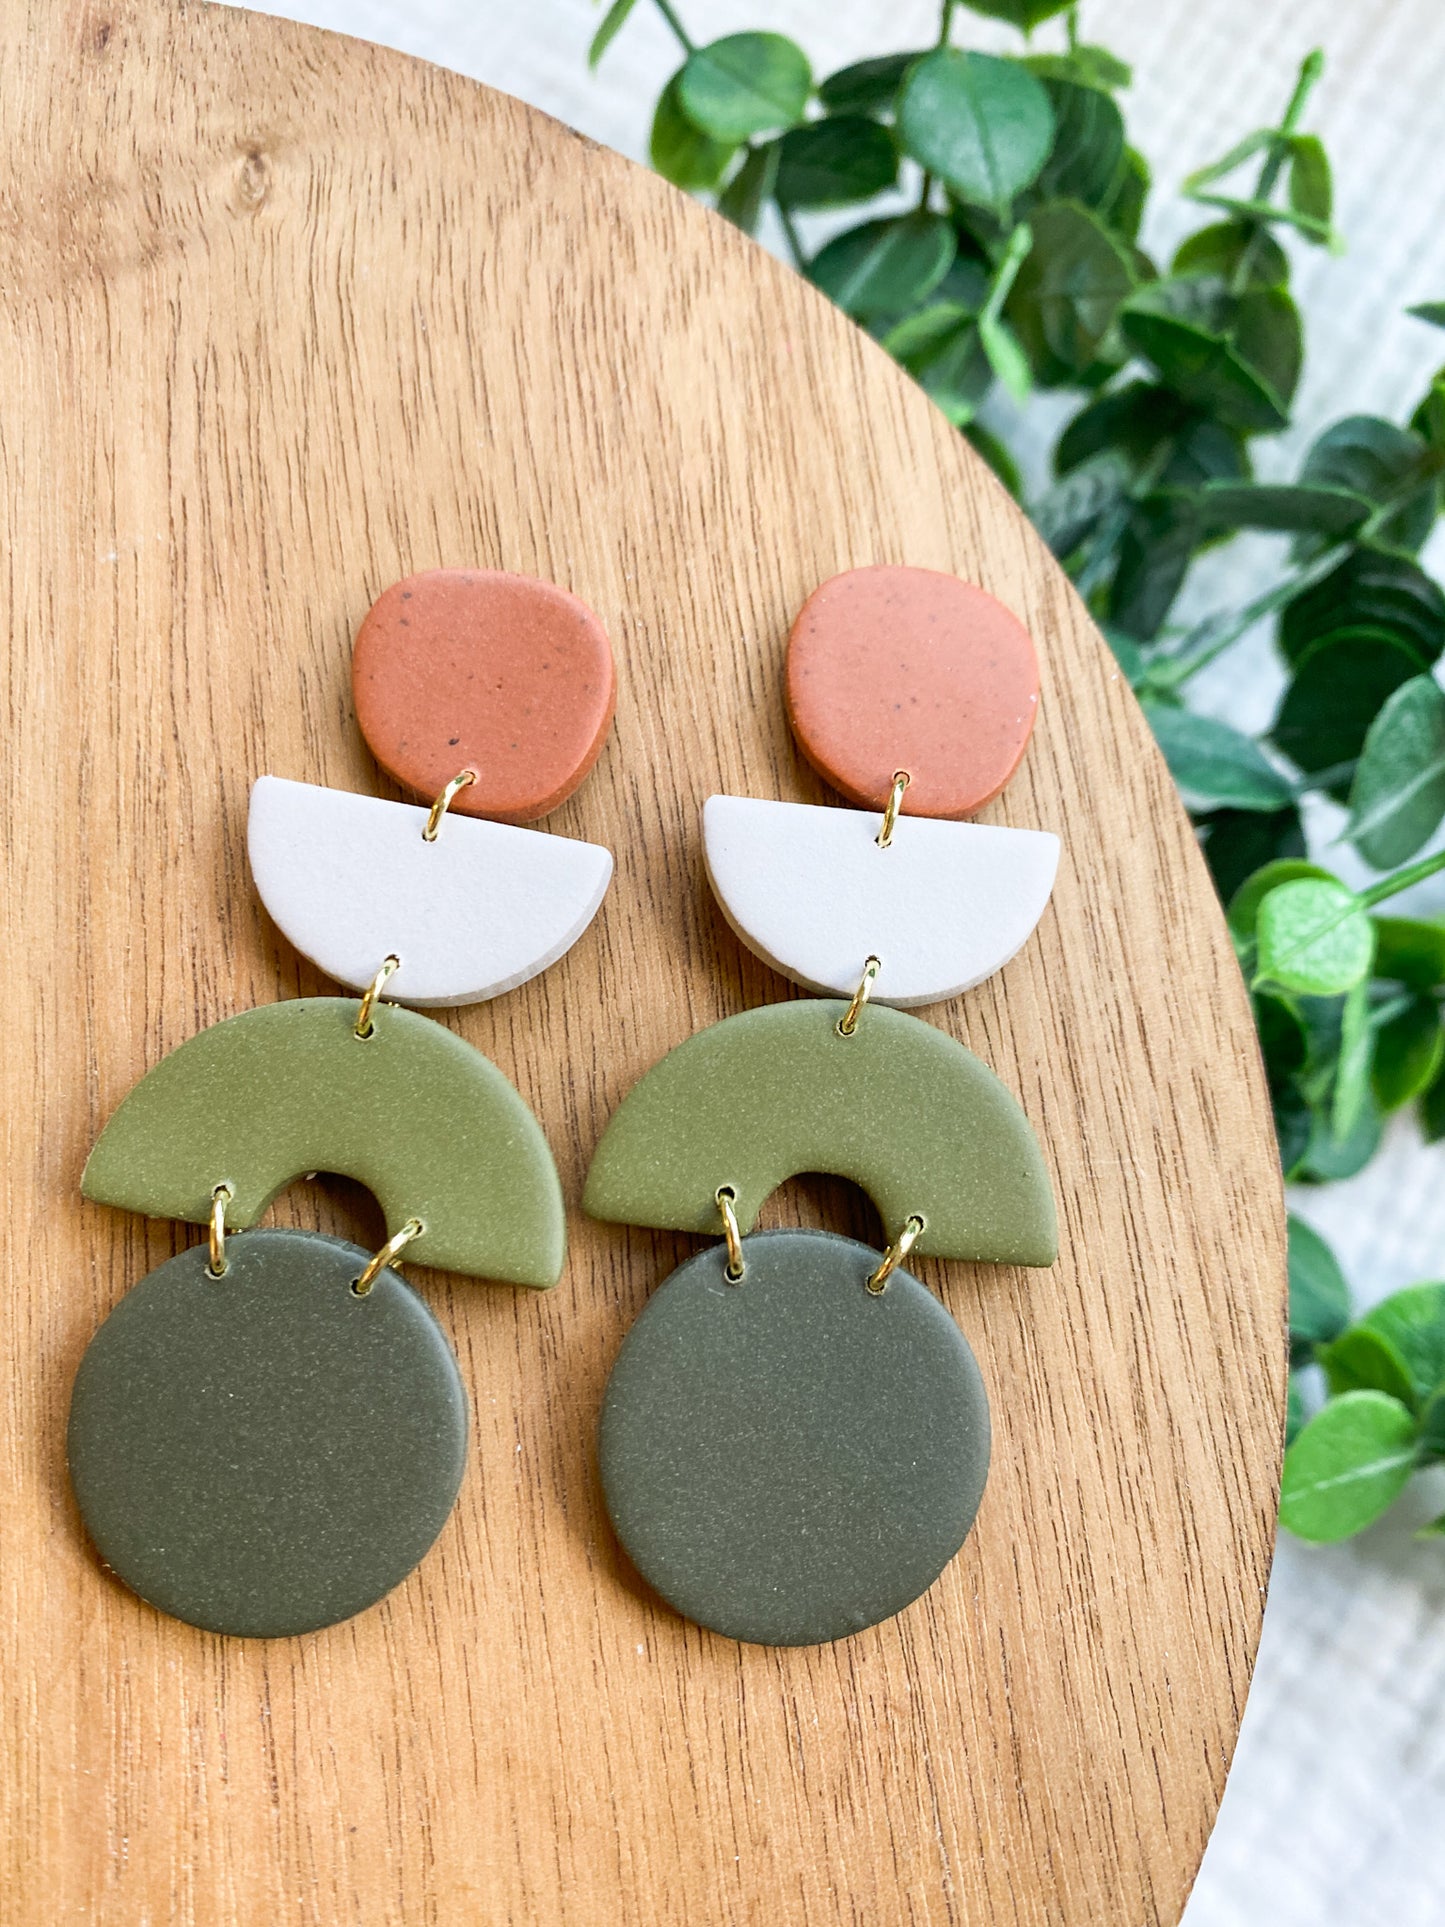 Boho and Fun Fall Colored Earrings | Green, Terracotta, Neutrals | Autumn Earrings | Statement Earrings | Lightweight